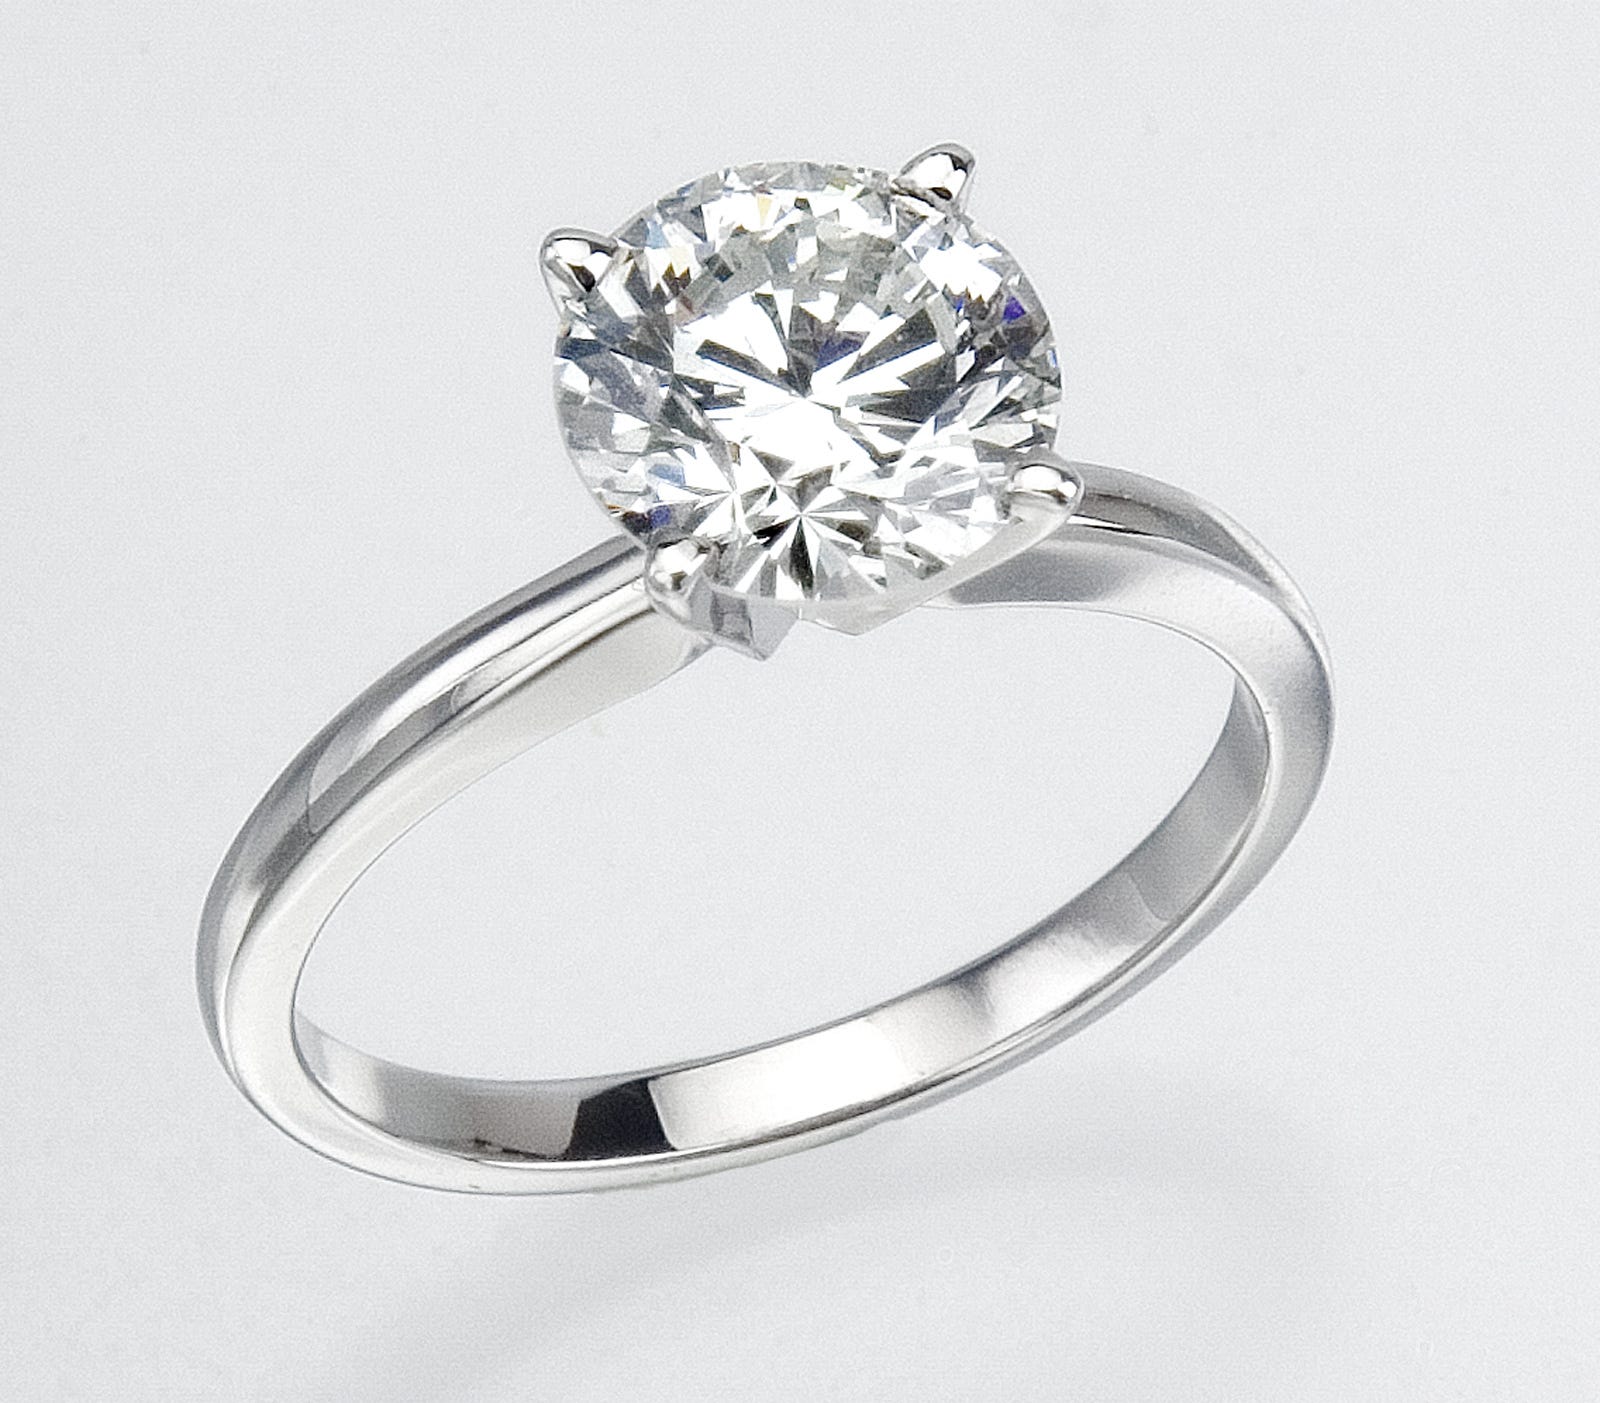 Women not always married to their wedding rings – Boston Herald